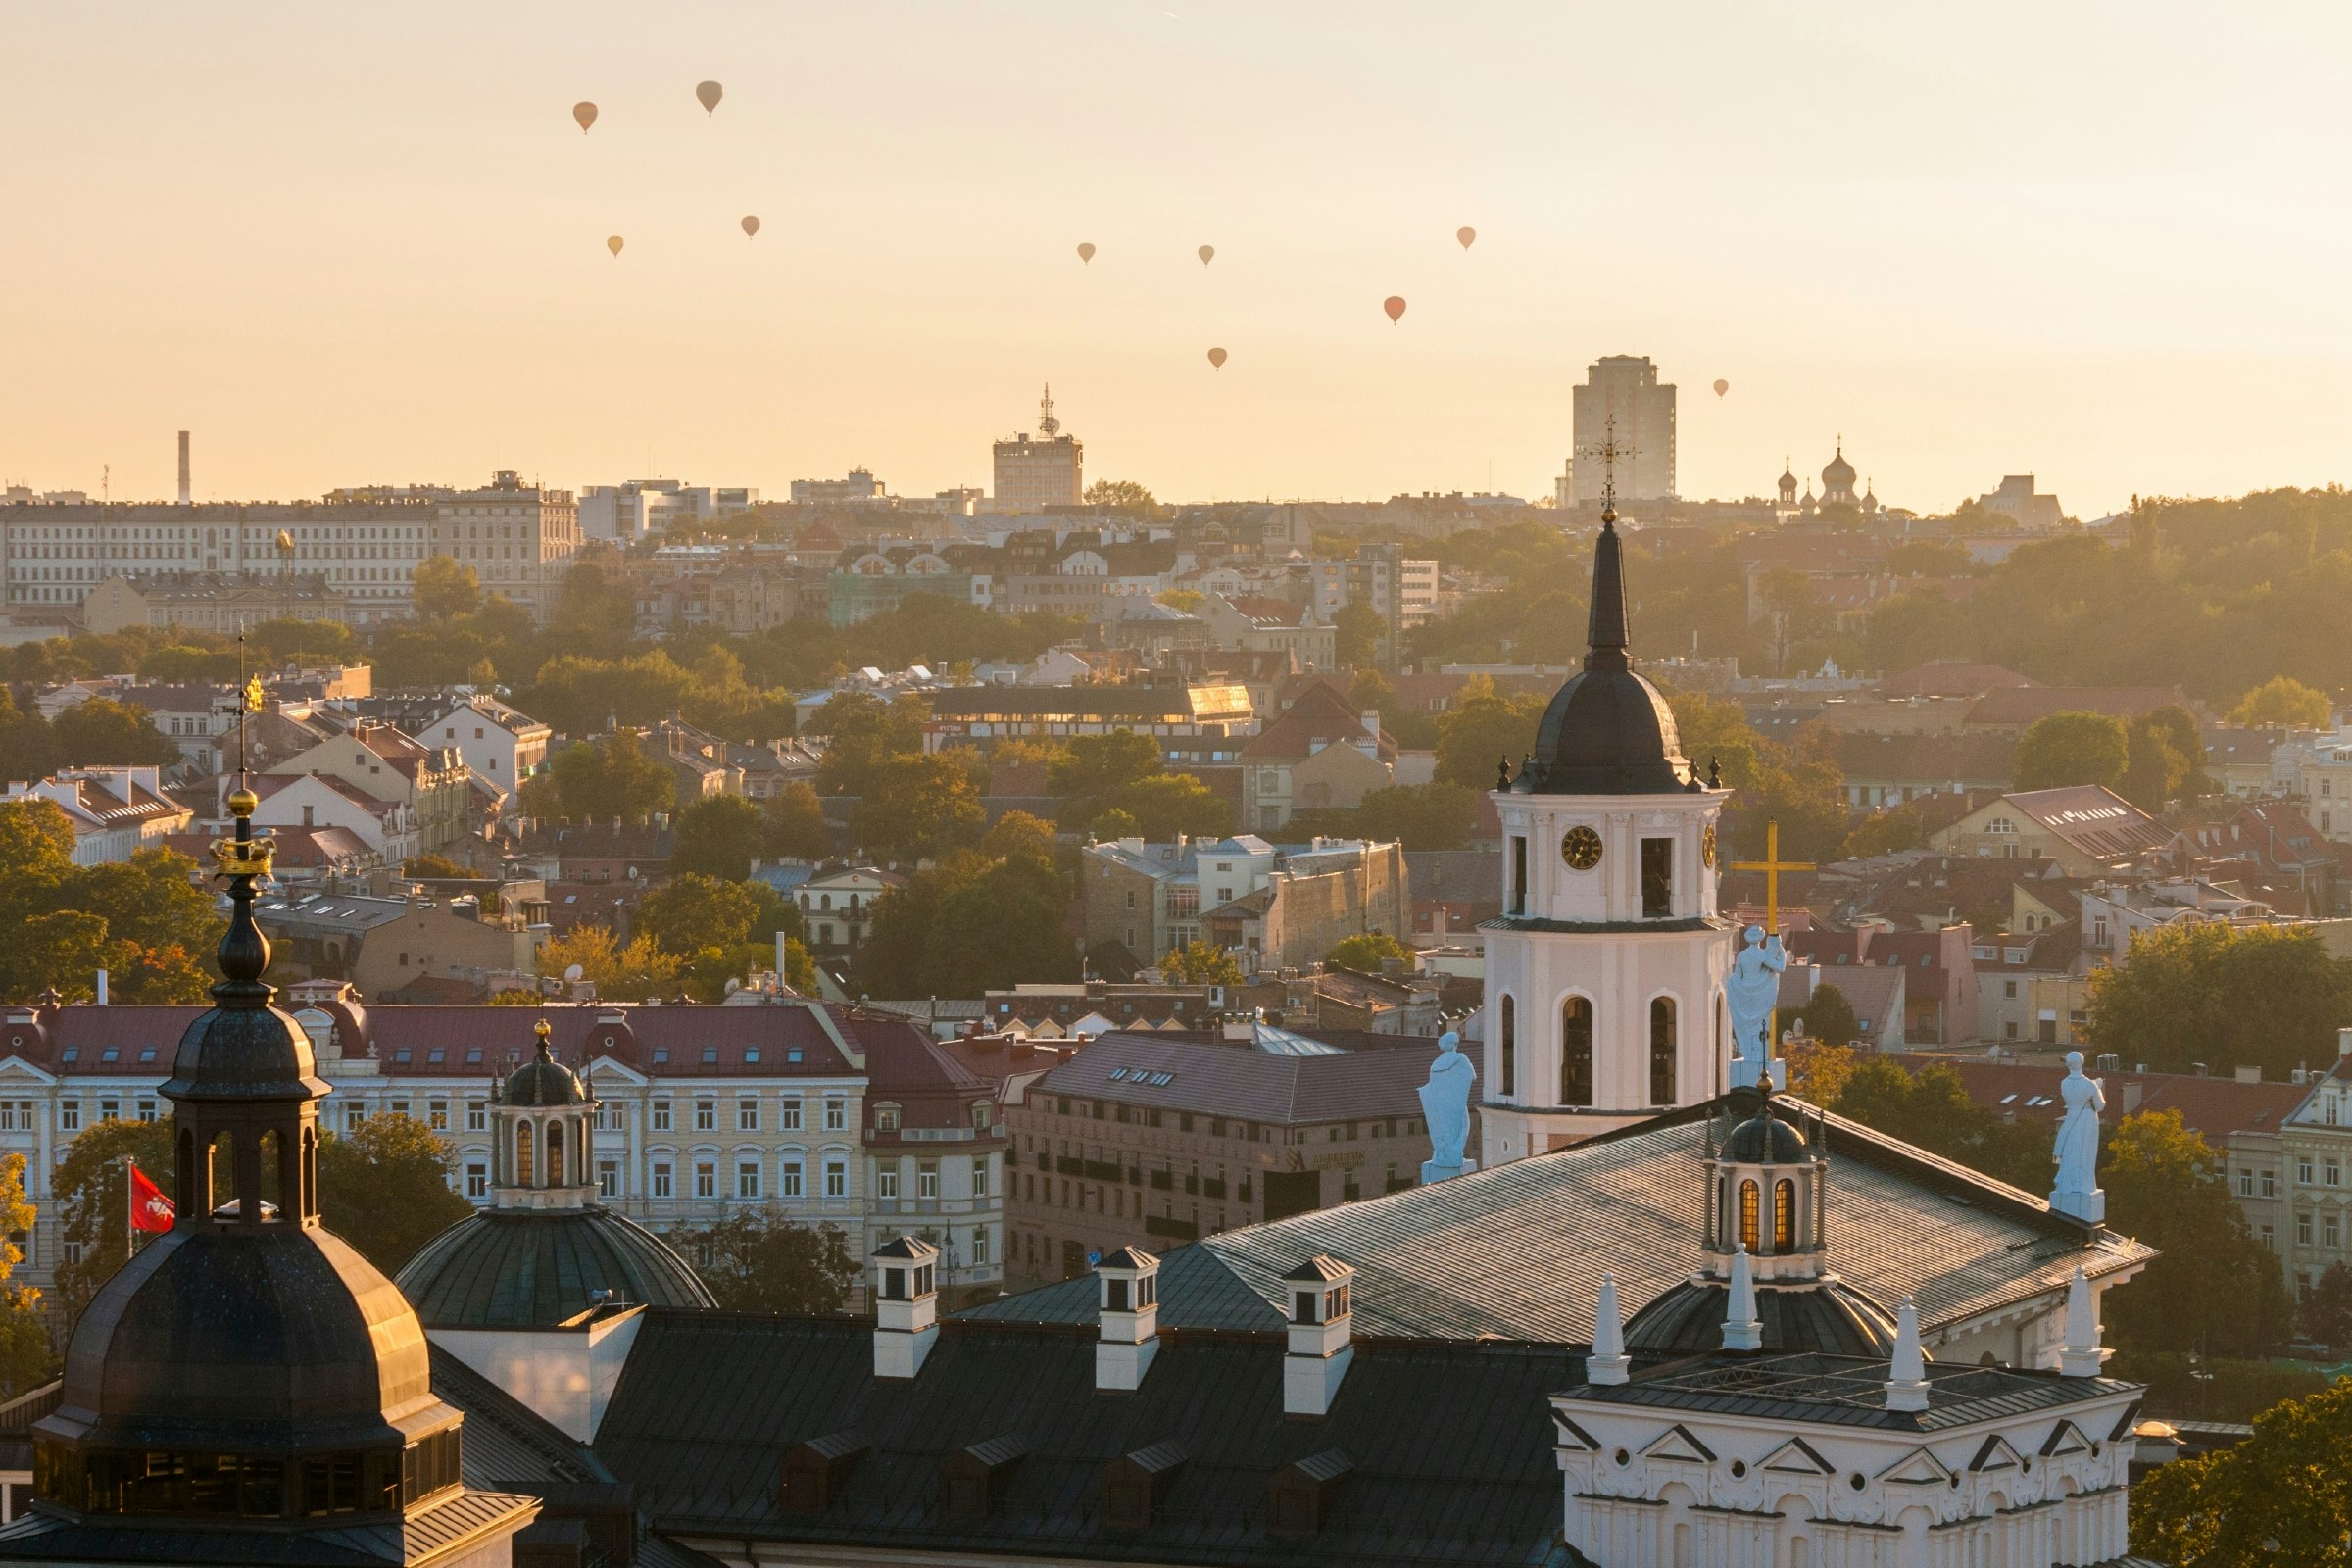 Hot-air balloons flying over Vilnius at sunset. 